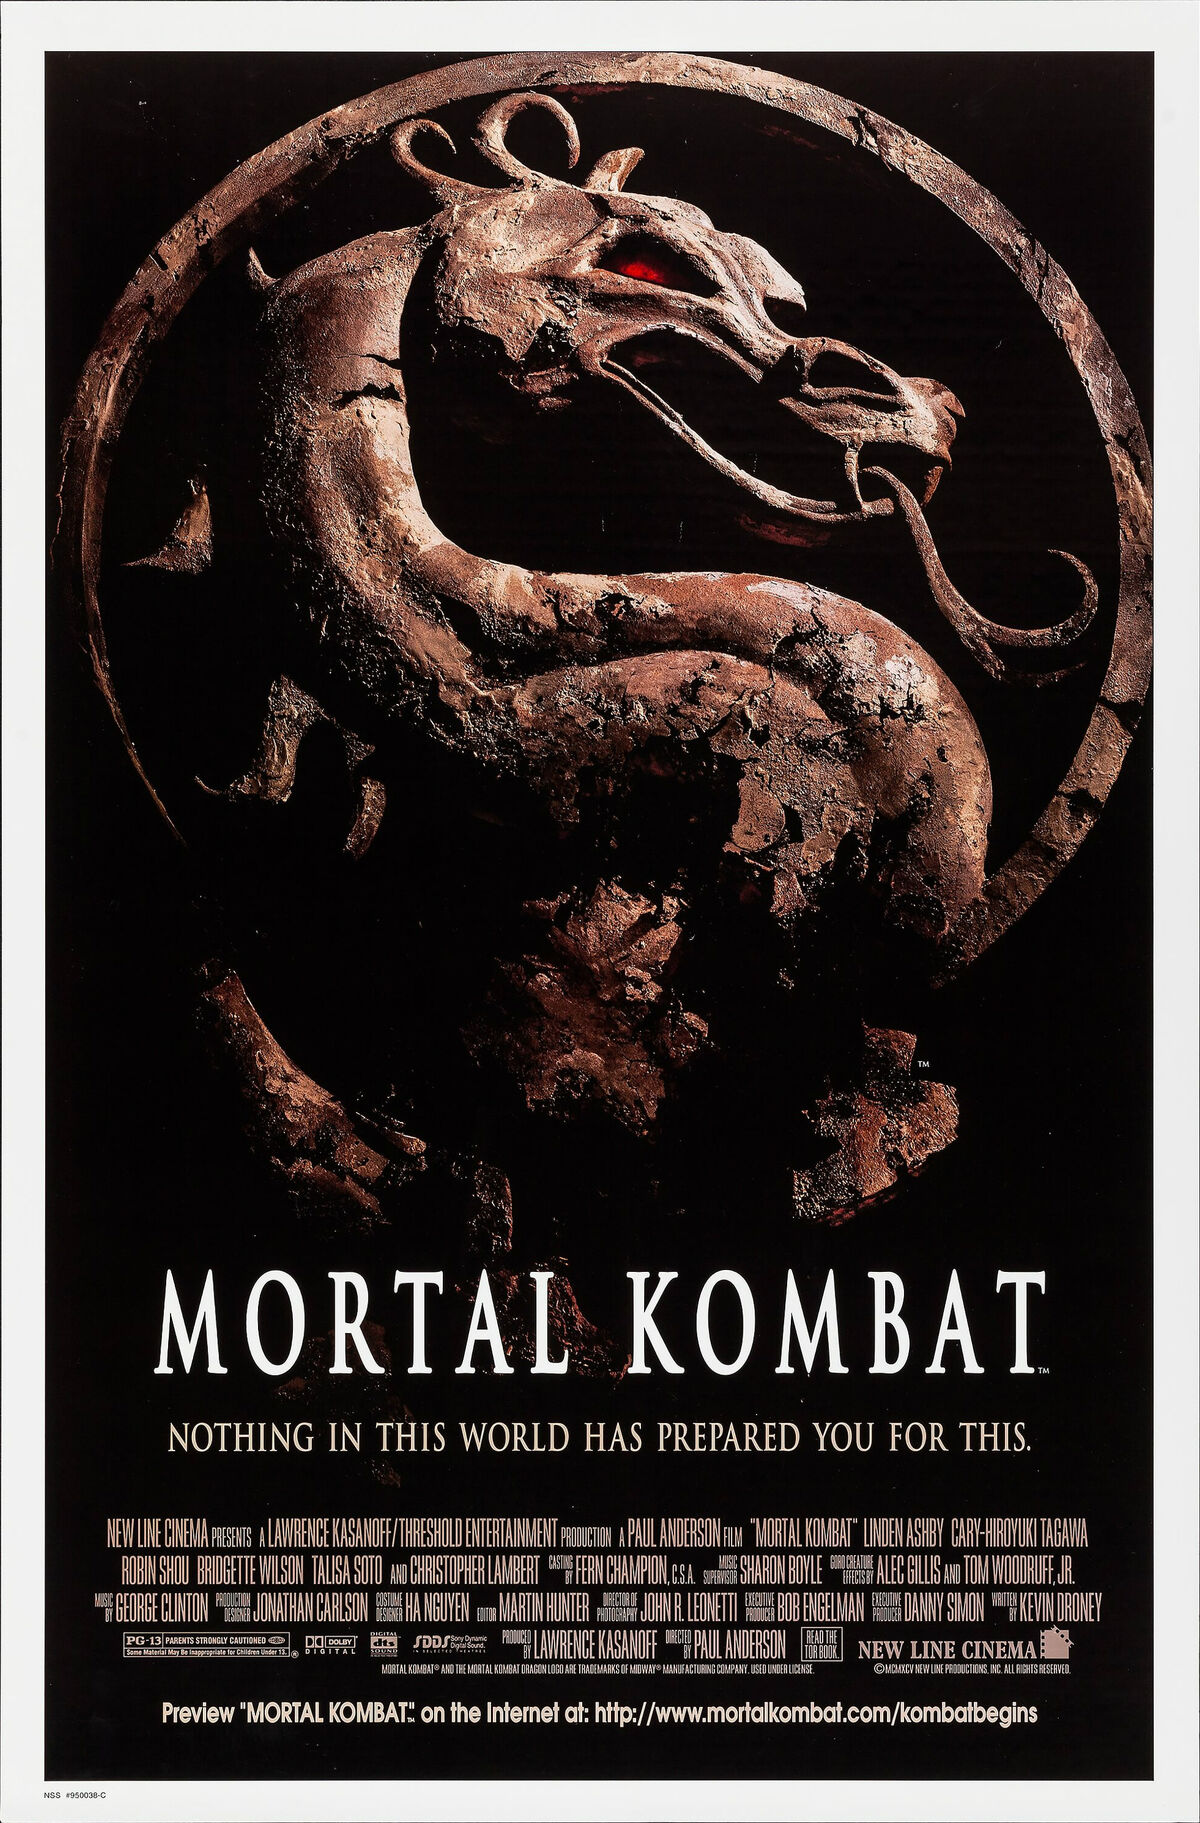 Mortal Kombat II Kollectors Magazine (1994) comic books